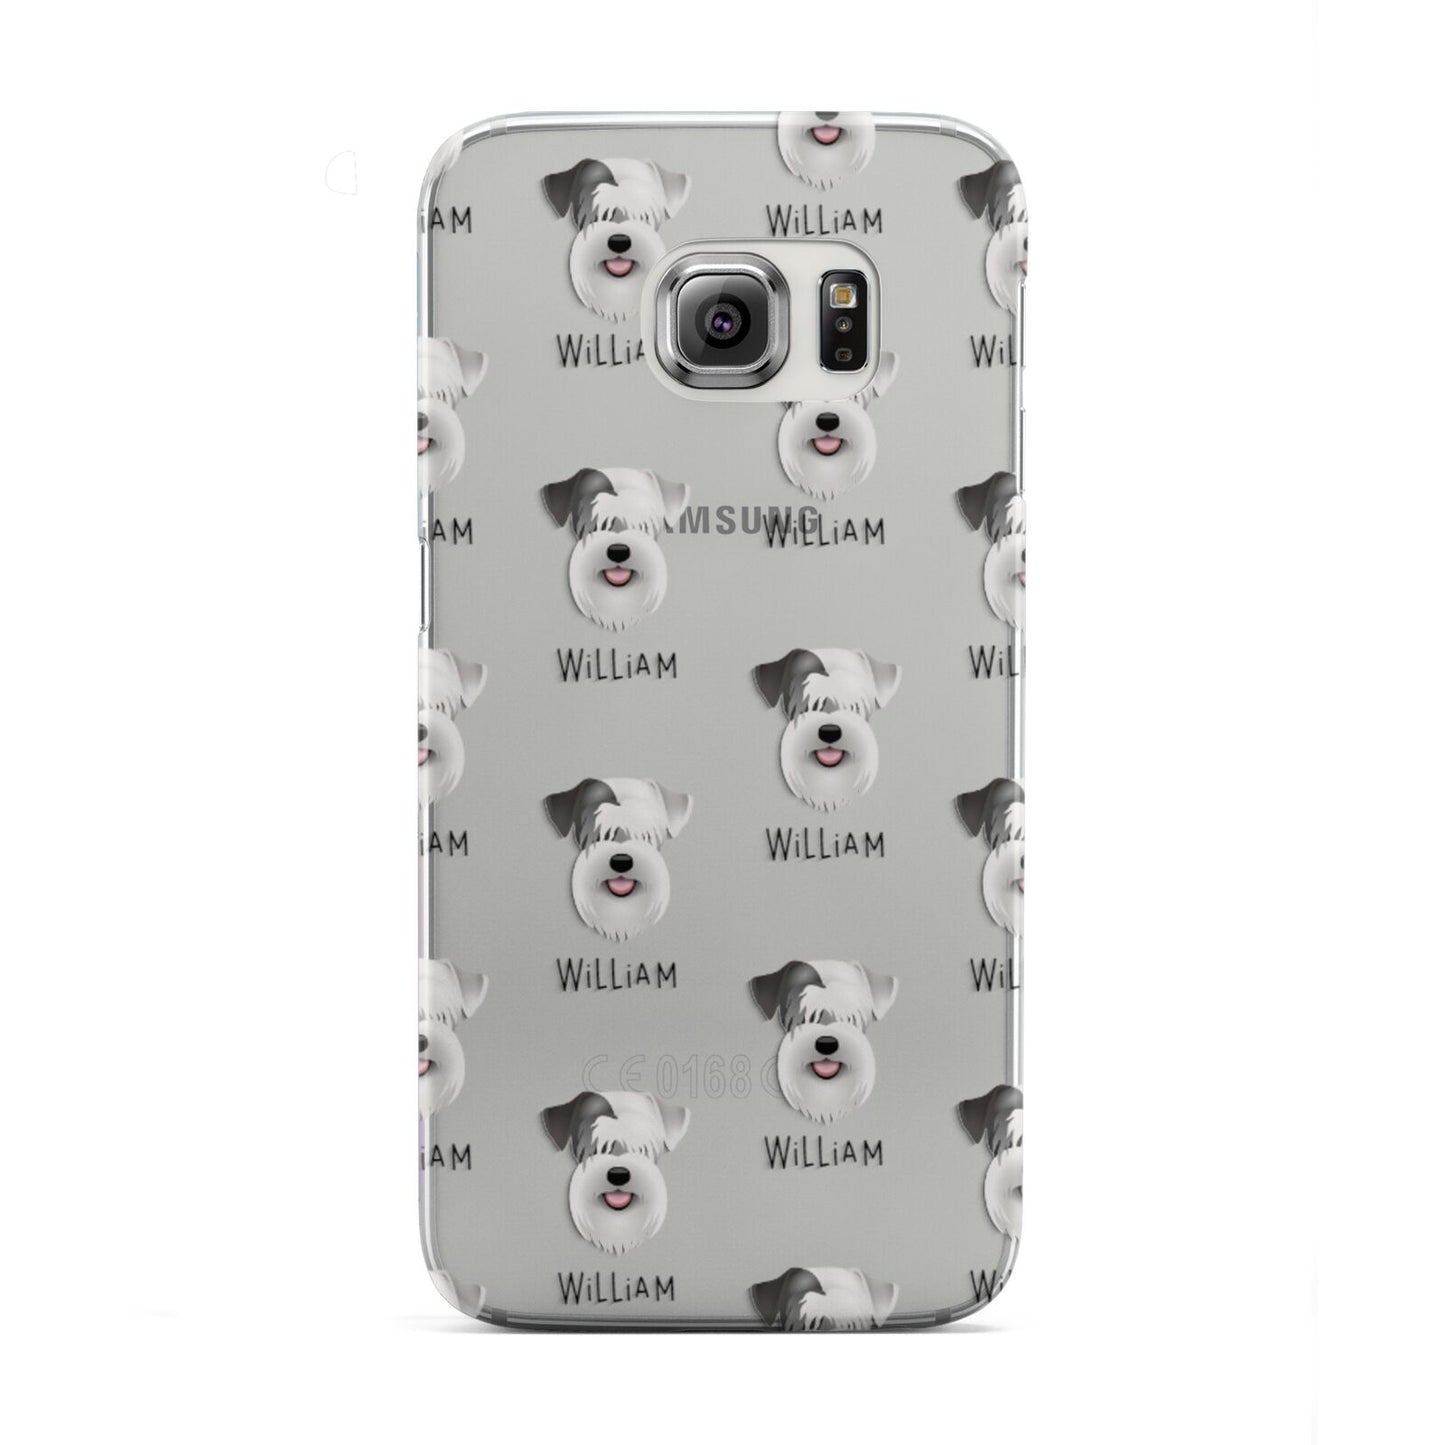 Sealyham Terrier Icon with Name Samsung Galaxy S6 Edge Case